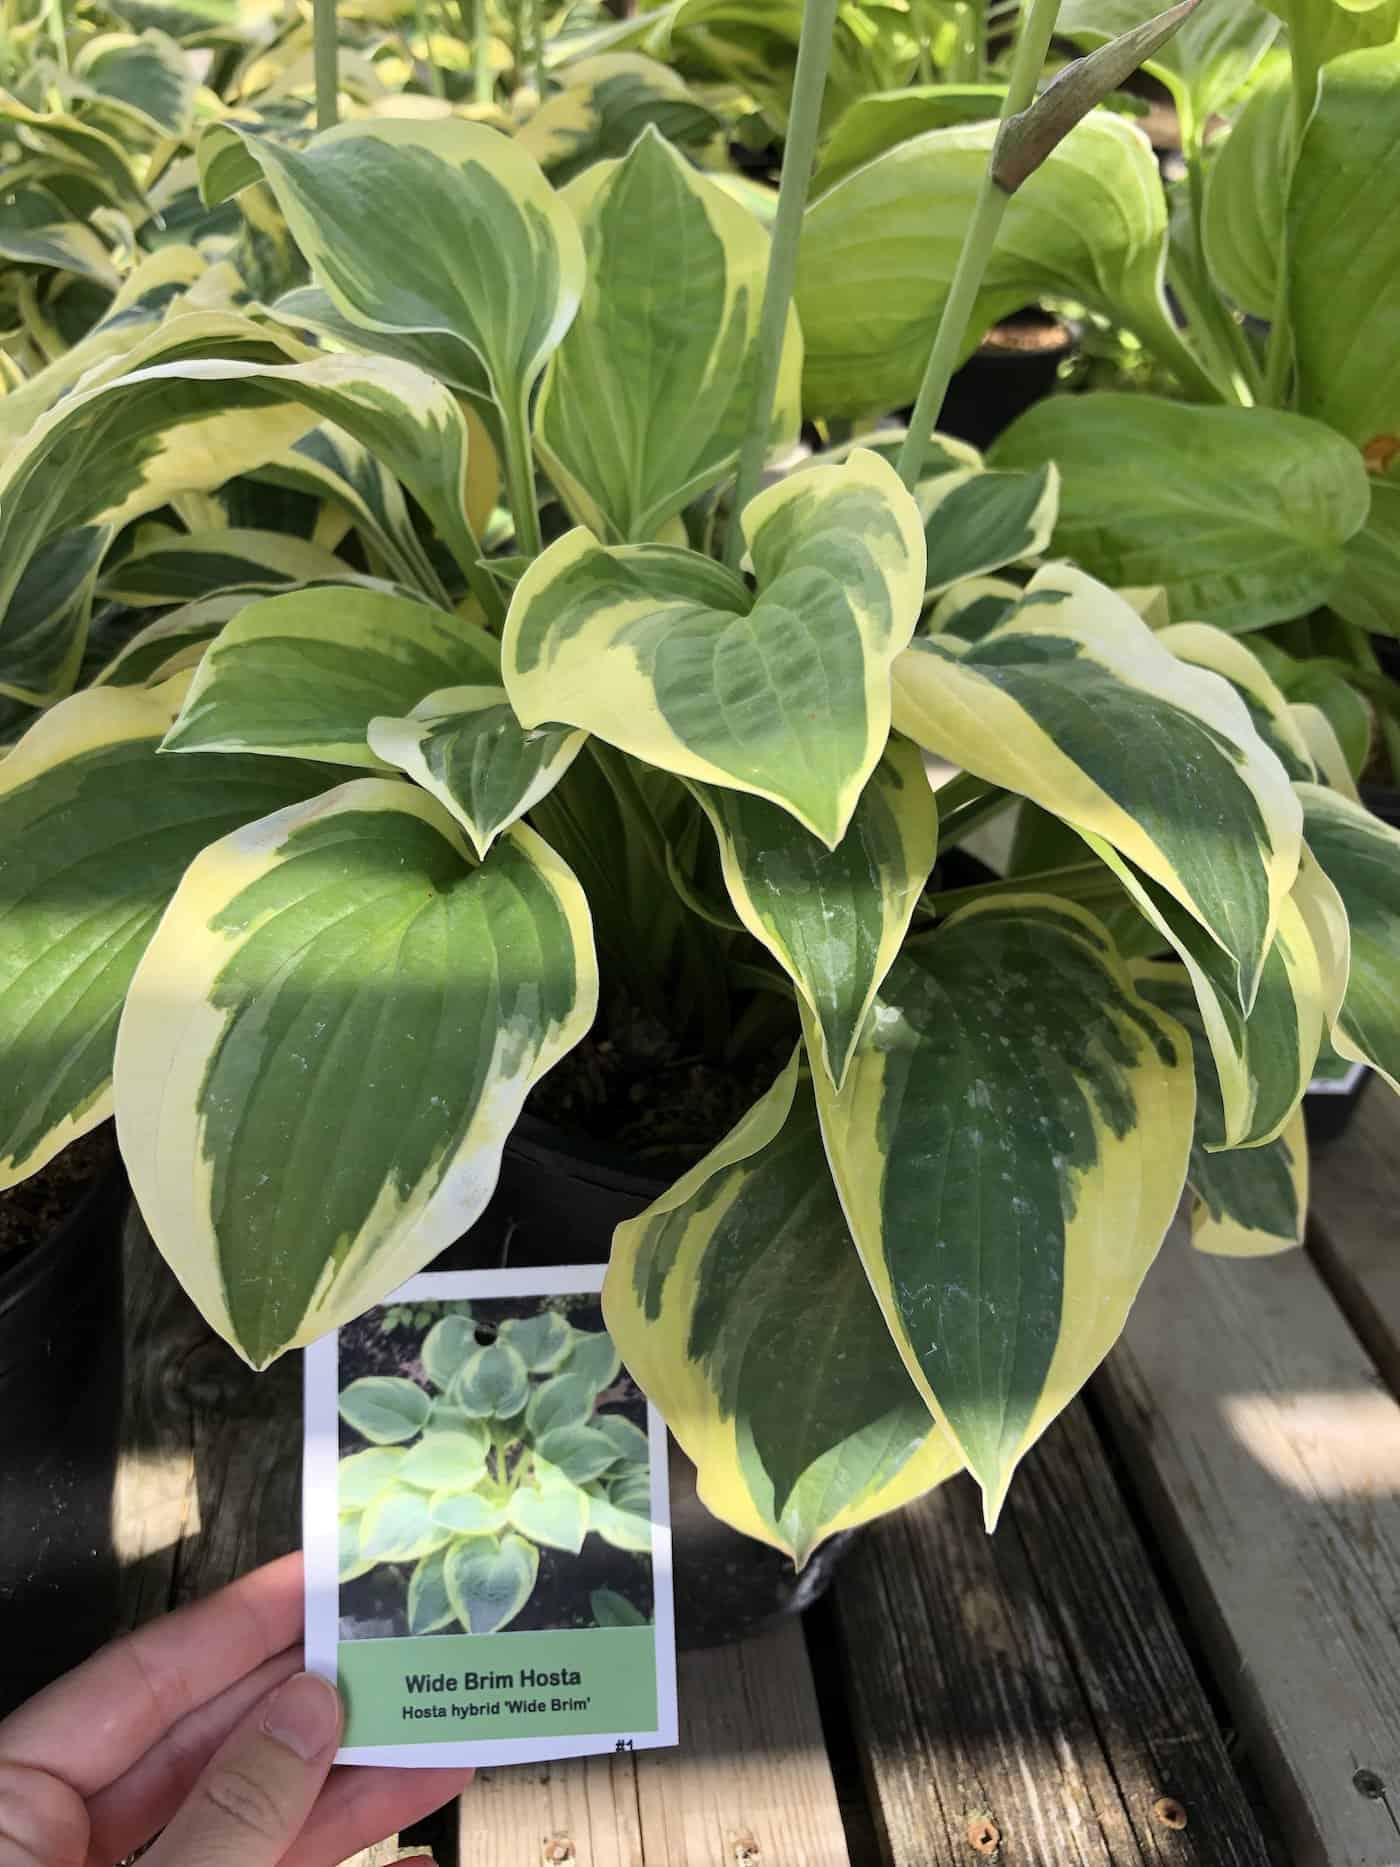 Wide brim hosta plant at nursery